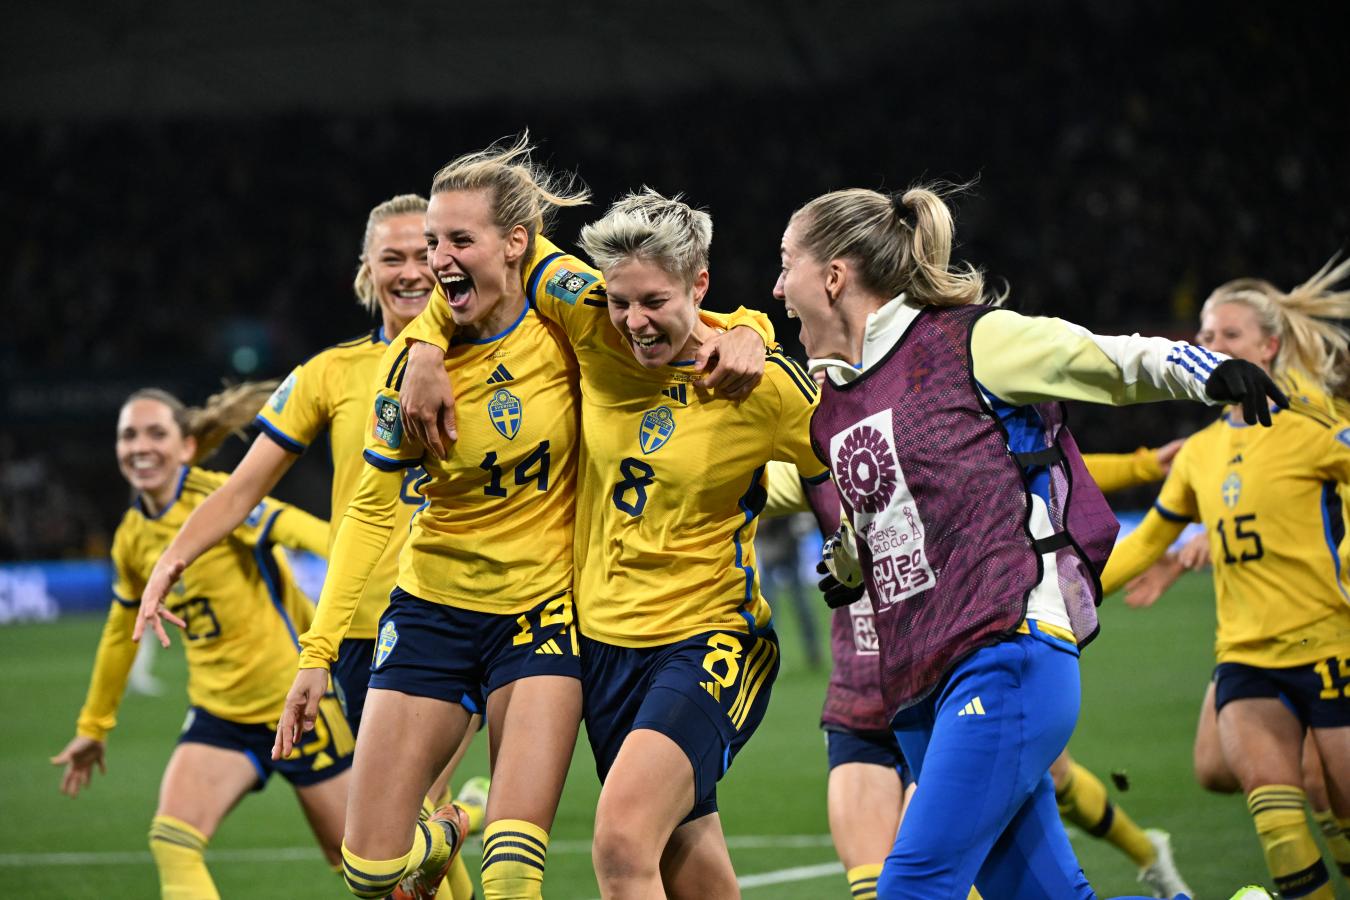 Imagen Suecia, que venció a Argentina en fase de grupos, es fuerte candidata a ganar el Mundial.